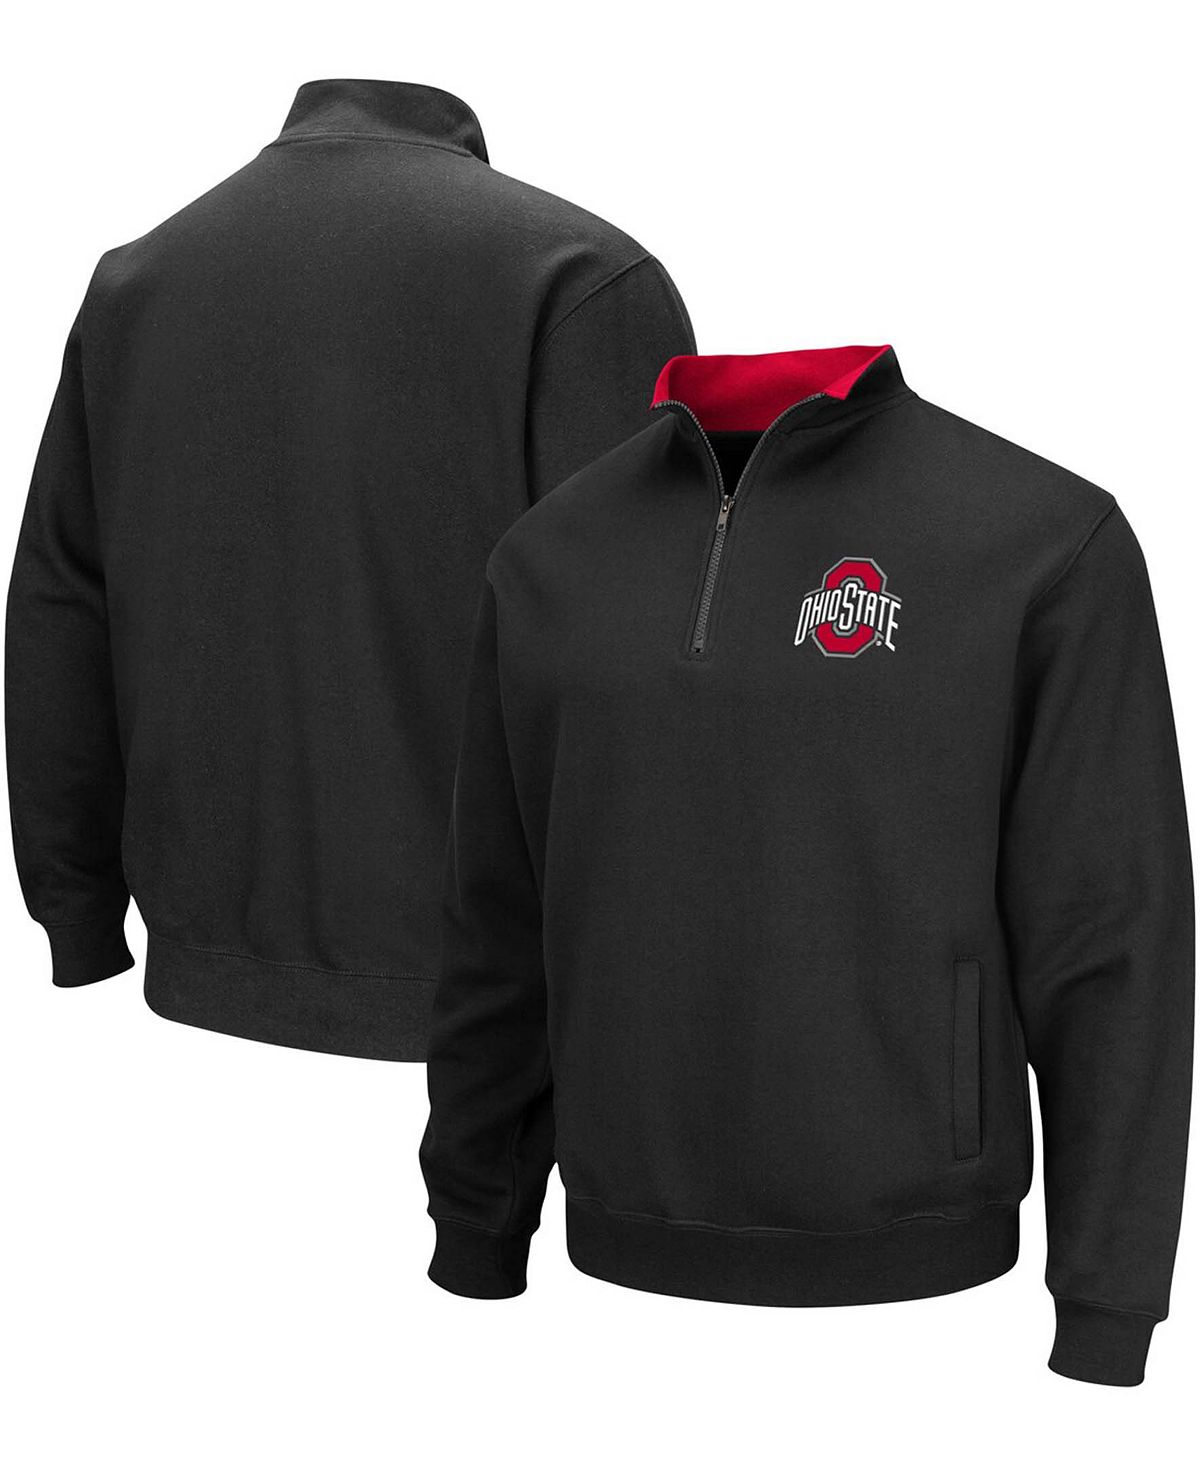 Мужская черная куртка с молнией четверти с логотипом Ohio State Buckeyes Tortugas Team Colosseum